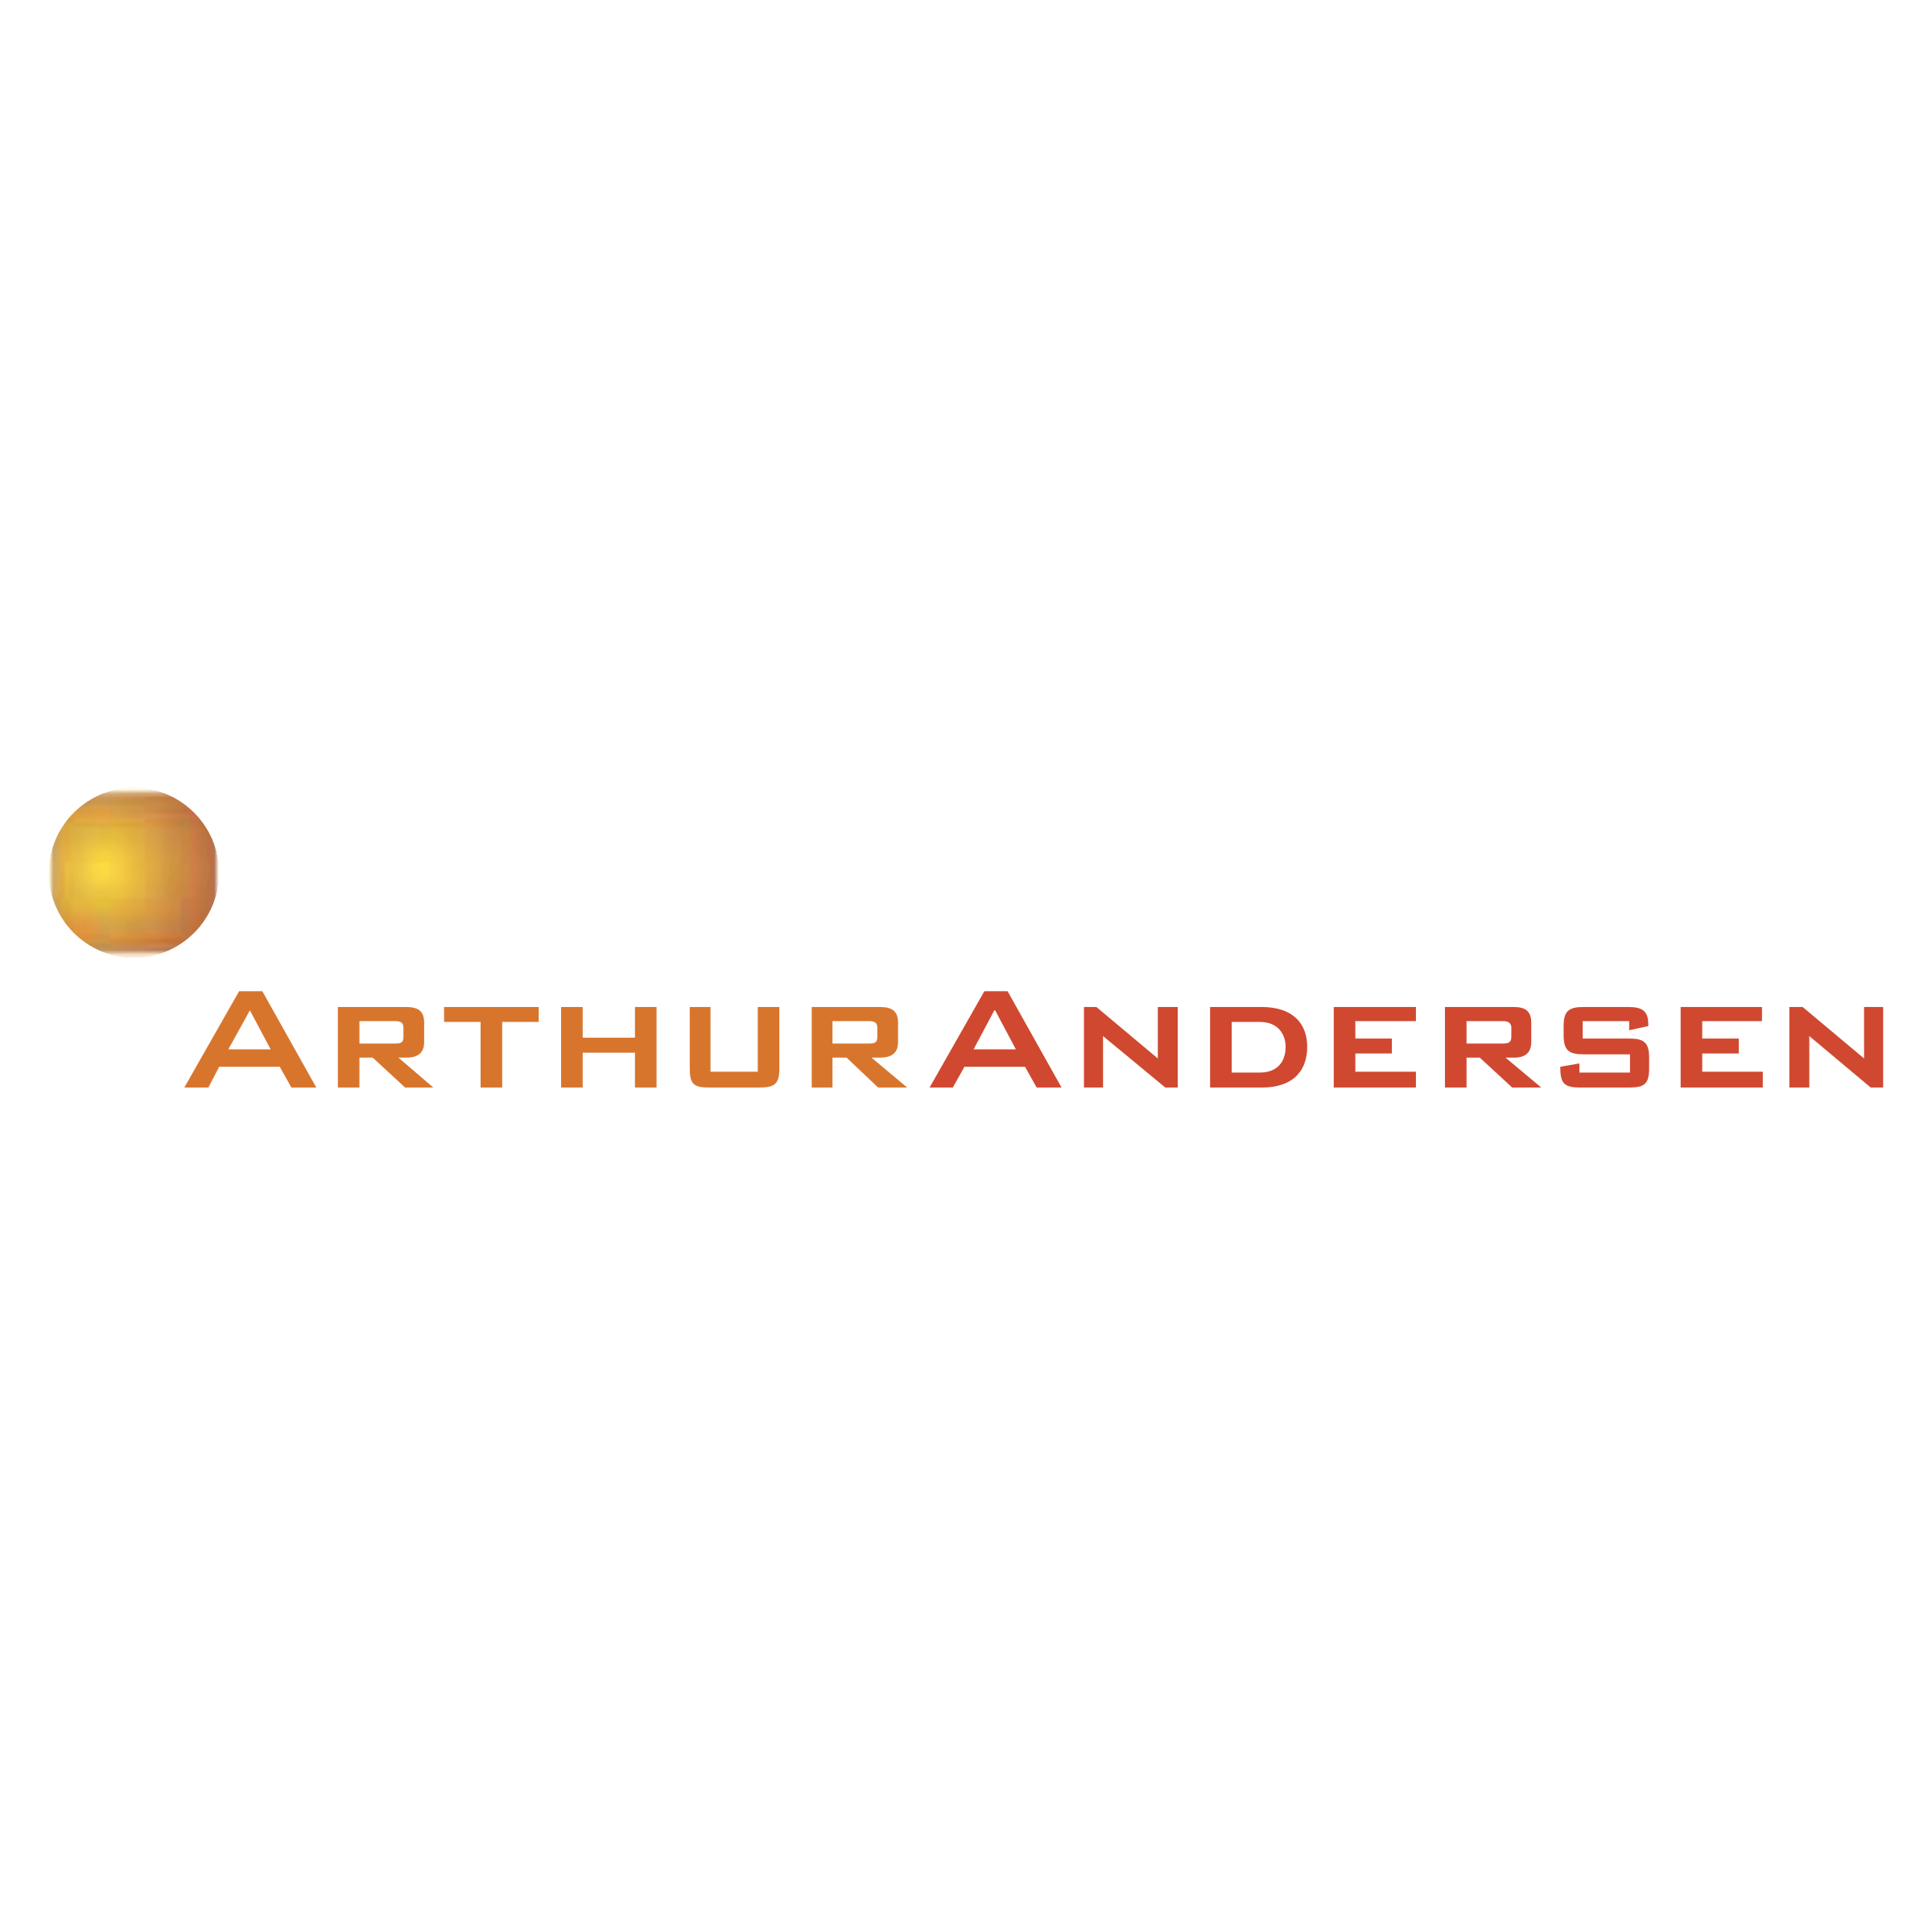 Arthur Andersen Logo - Arthur Andersen Logo PNG Transparent & SVG Vector - Freebie Supply